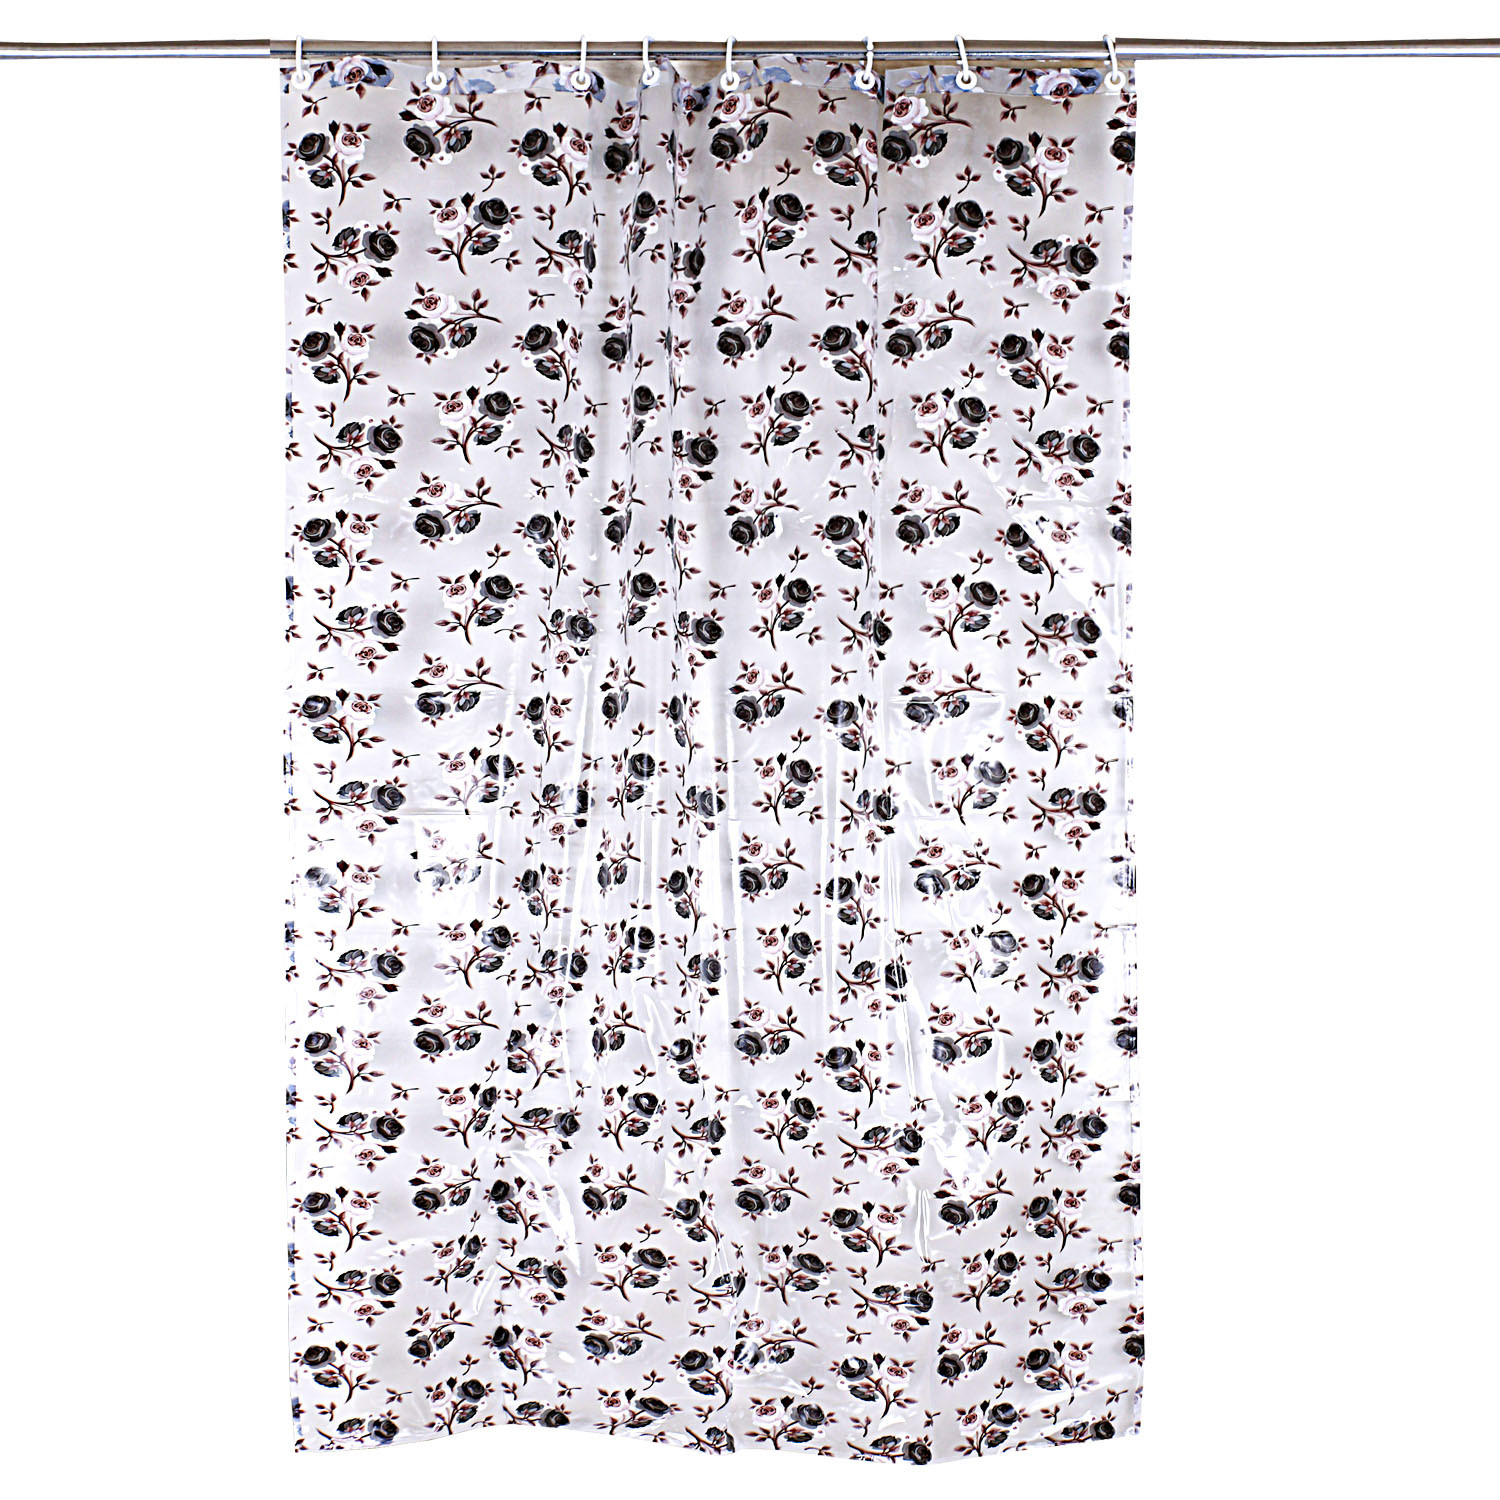 Kuber Industries PVC Waterproof Rose Print Shower Curtain For Bathroom With 8 Ring,7 Feet (Brown)